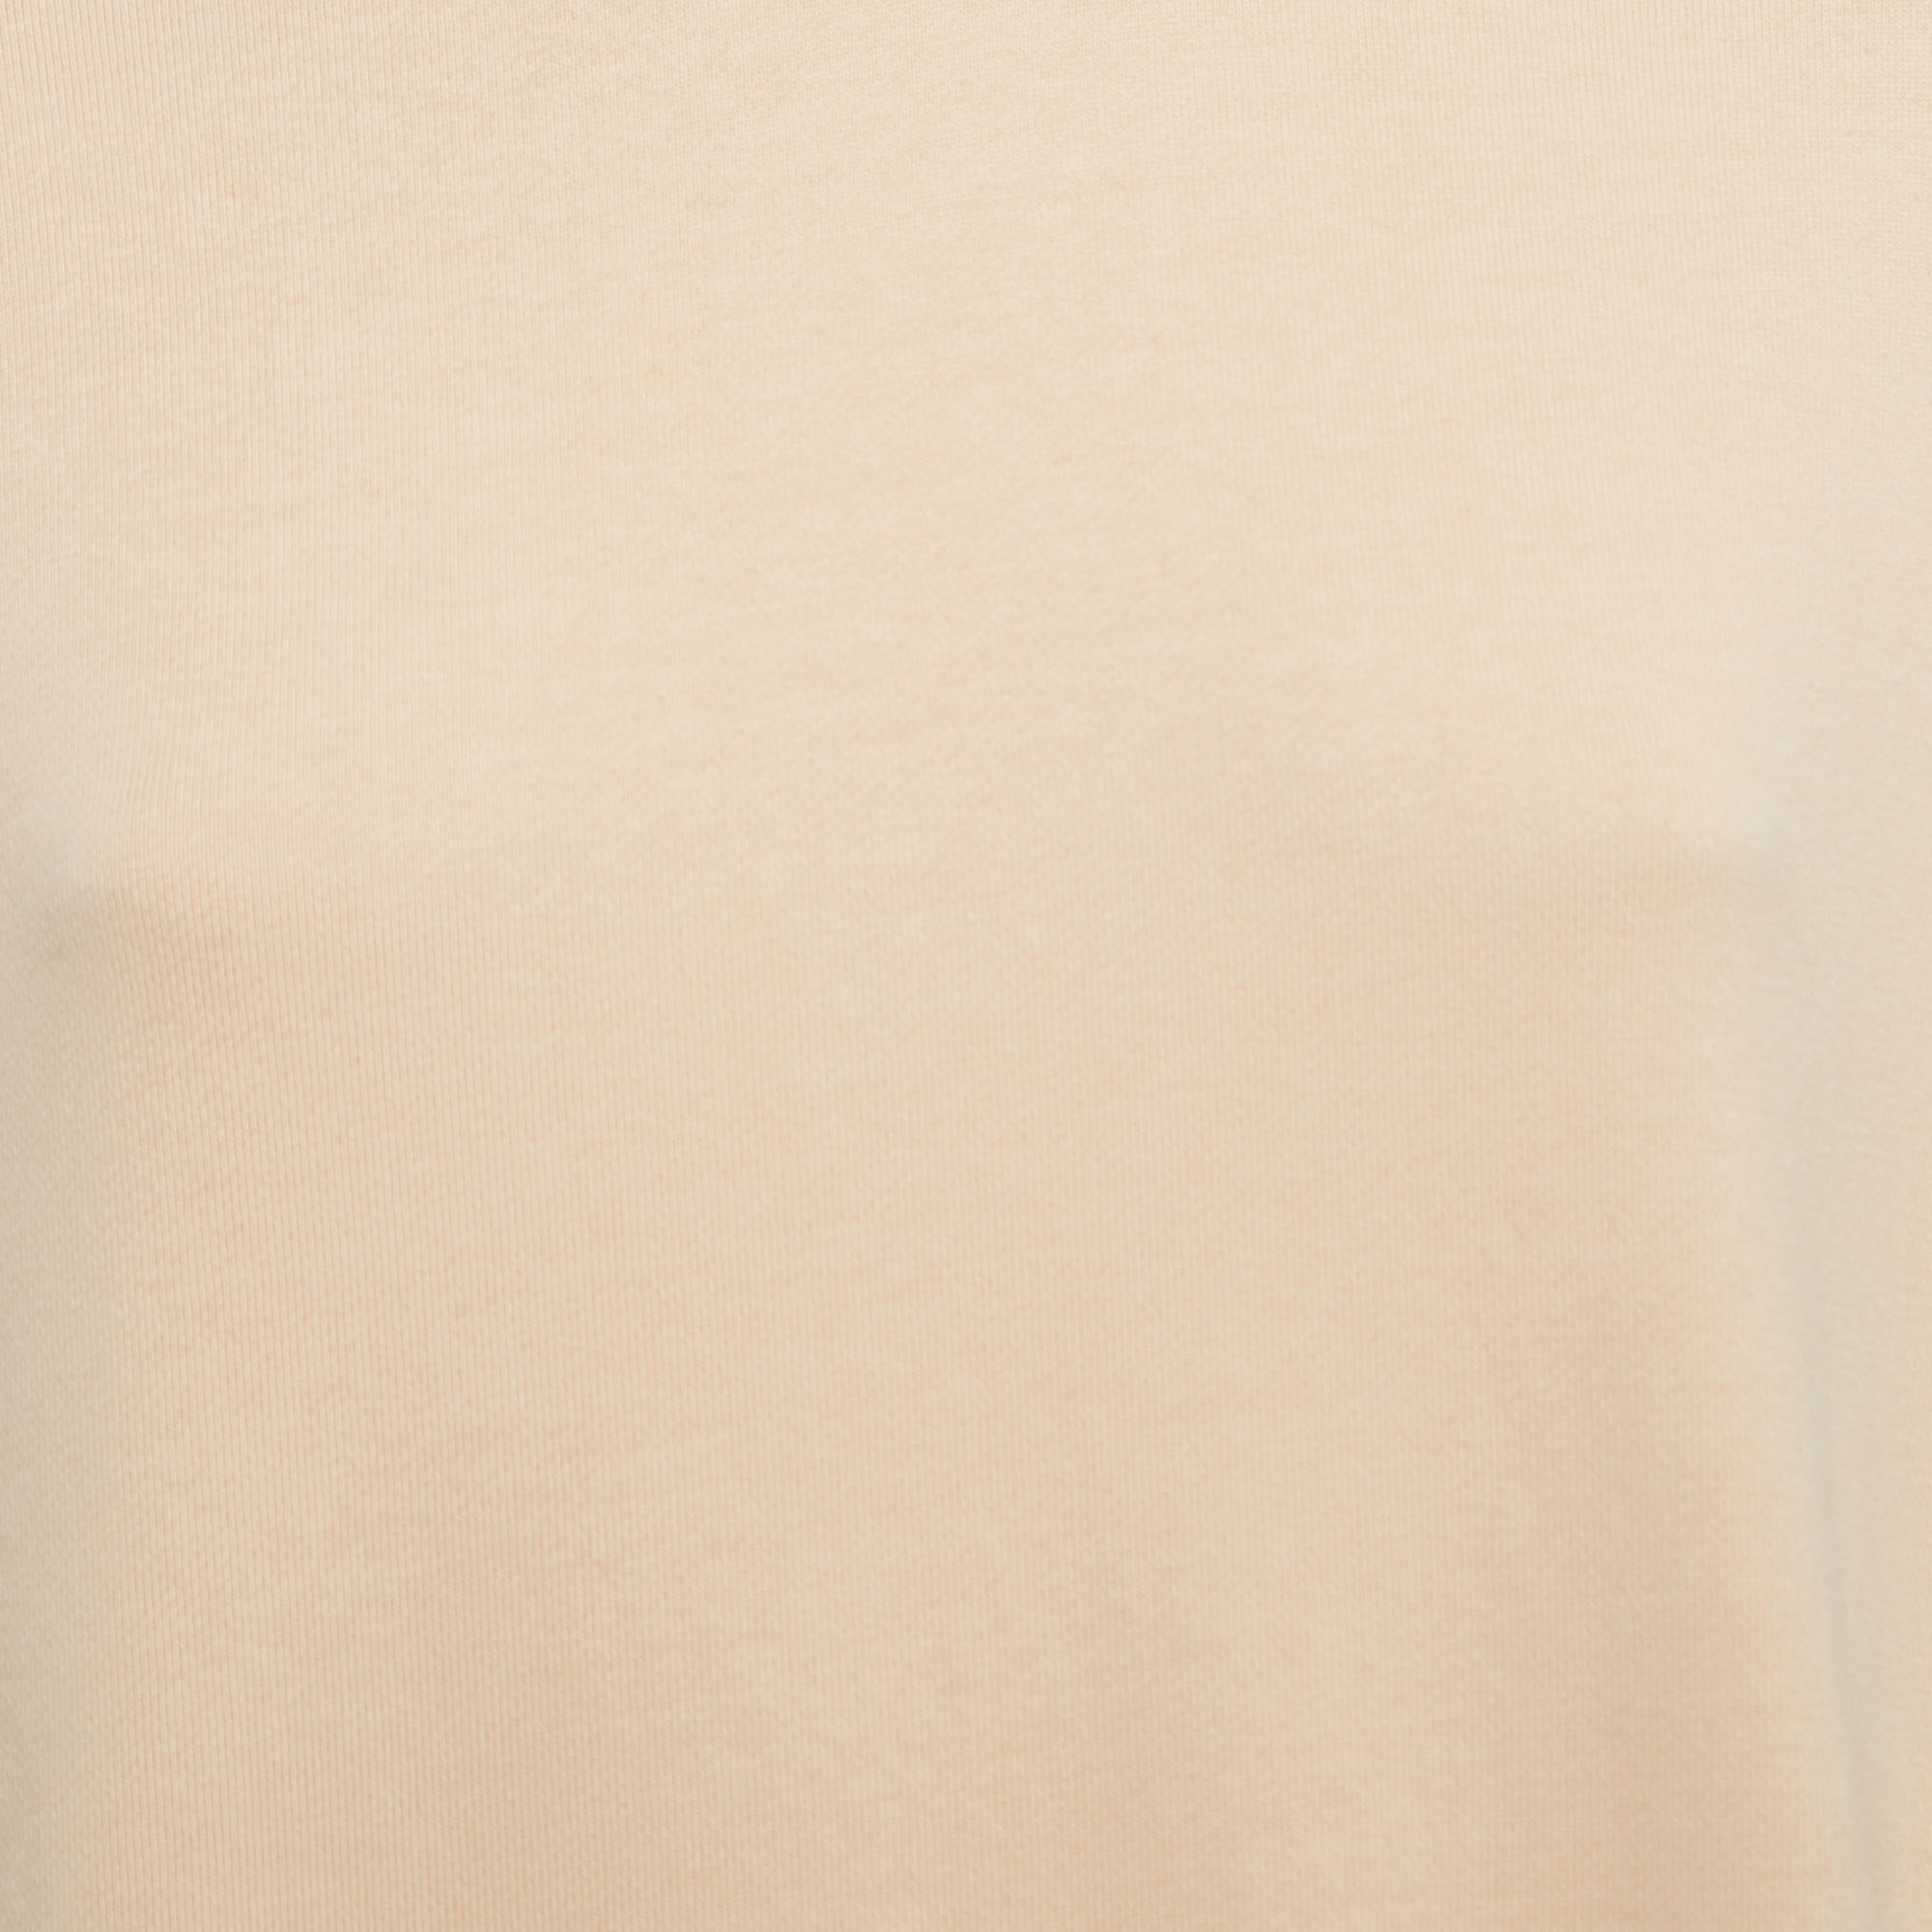 Retrofete Beige Cotton Charlotte Sweatshirt Mini Dress XS